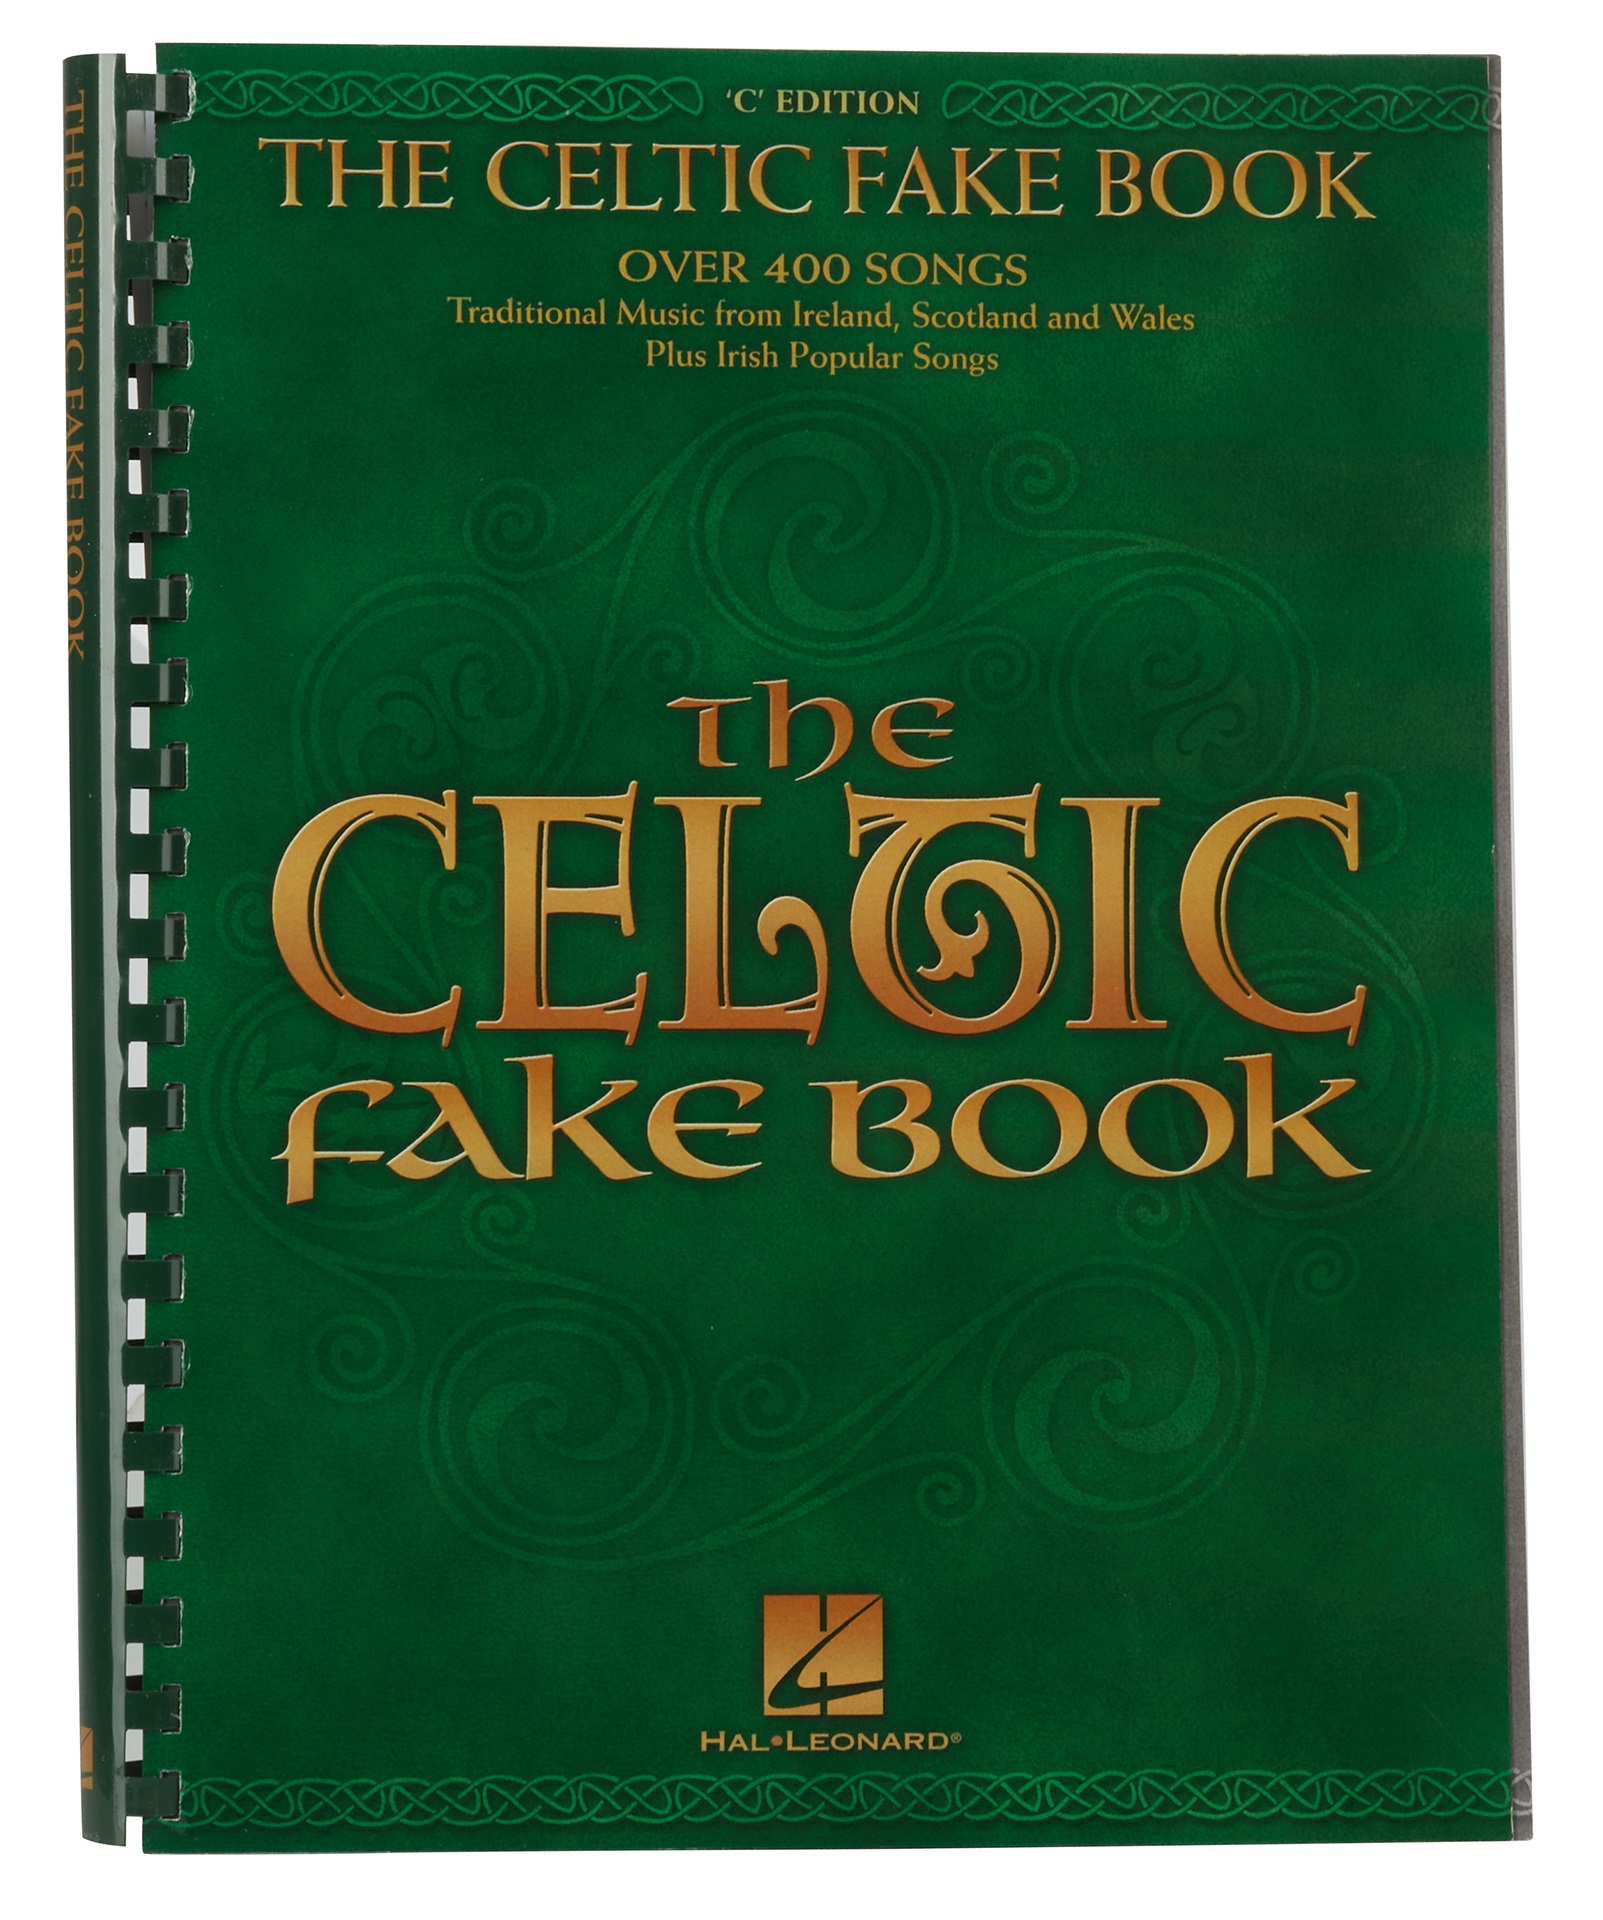 Fotografie MS Celtic Fake Book